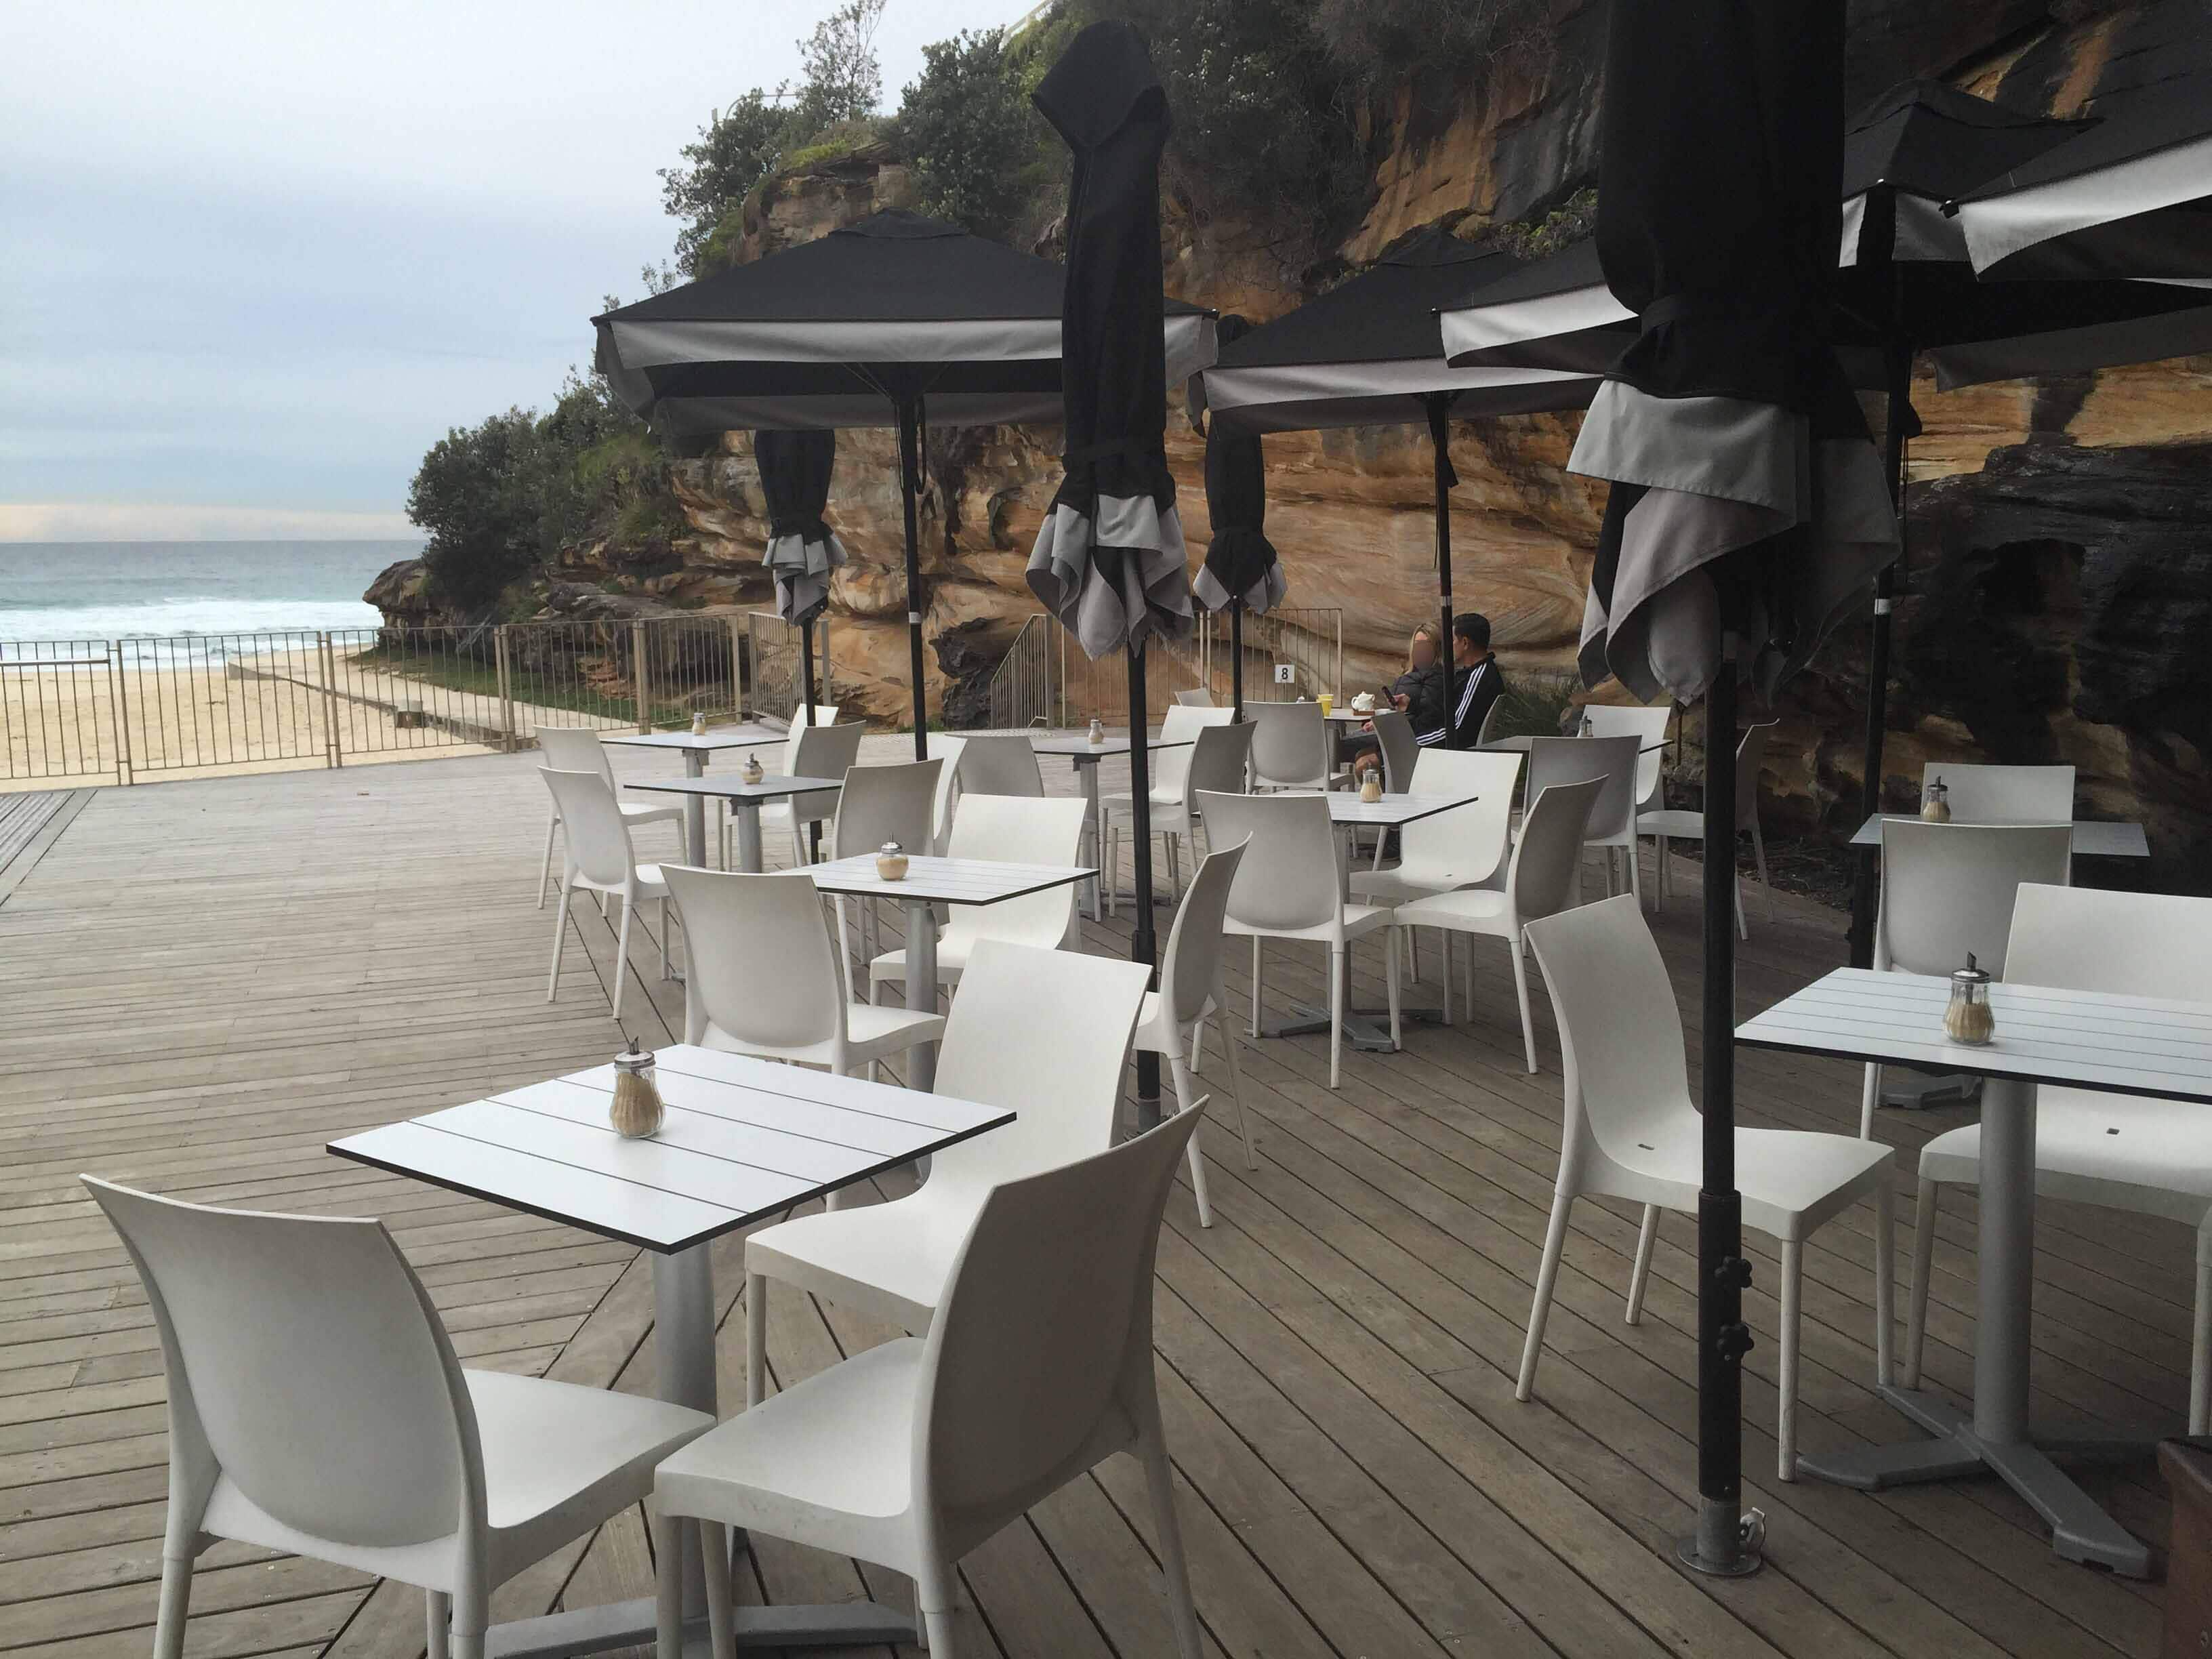 Tamarama Beach Cafe Menu